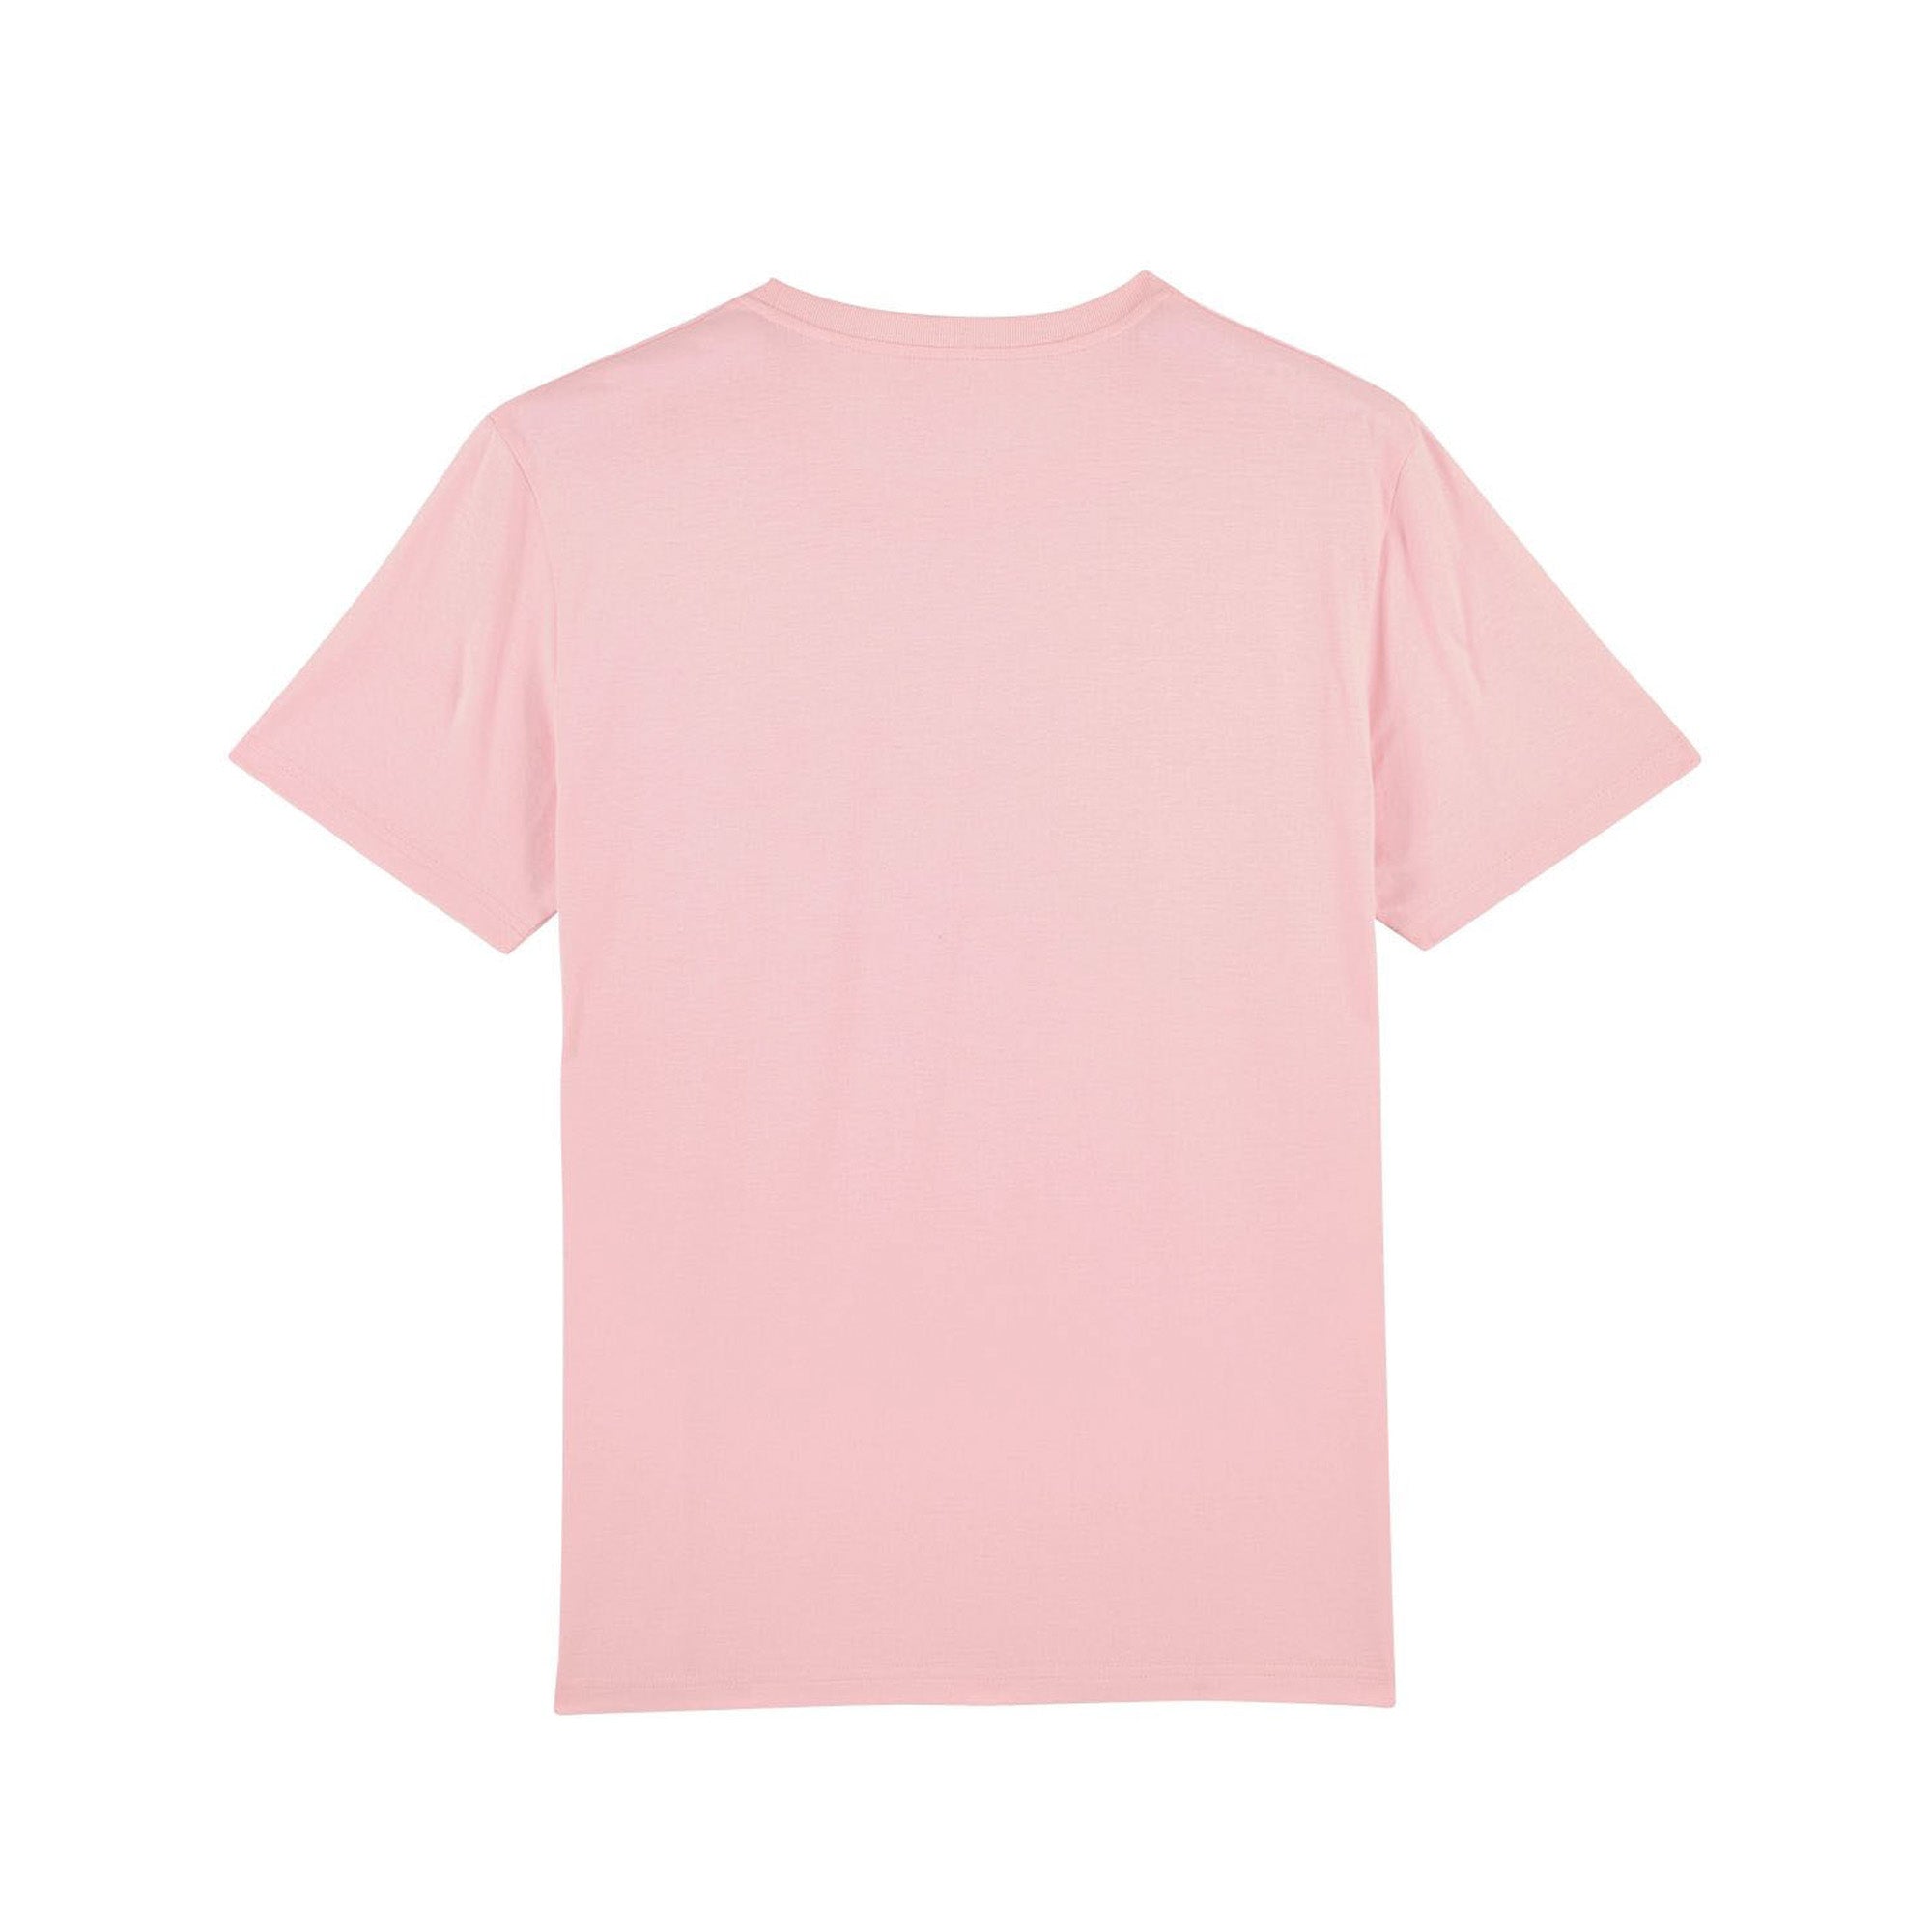 Back of light pink tshirt